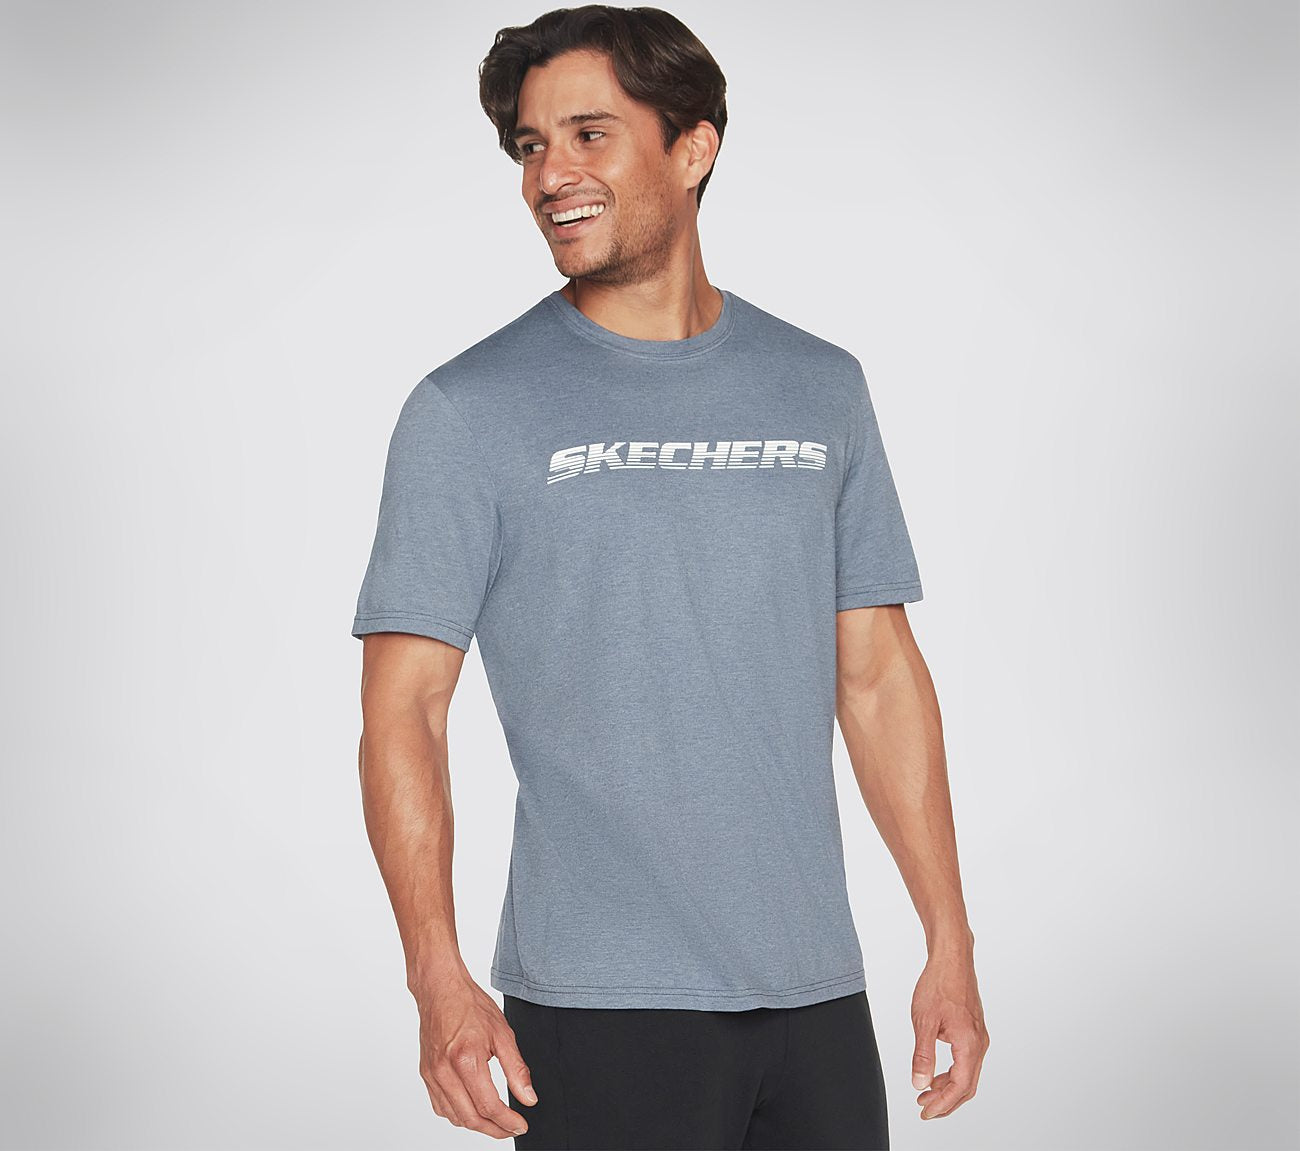 Motion T-shirt Clothes Skechers